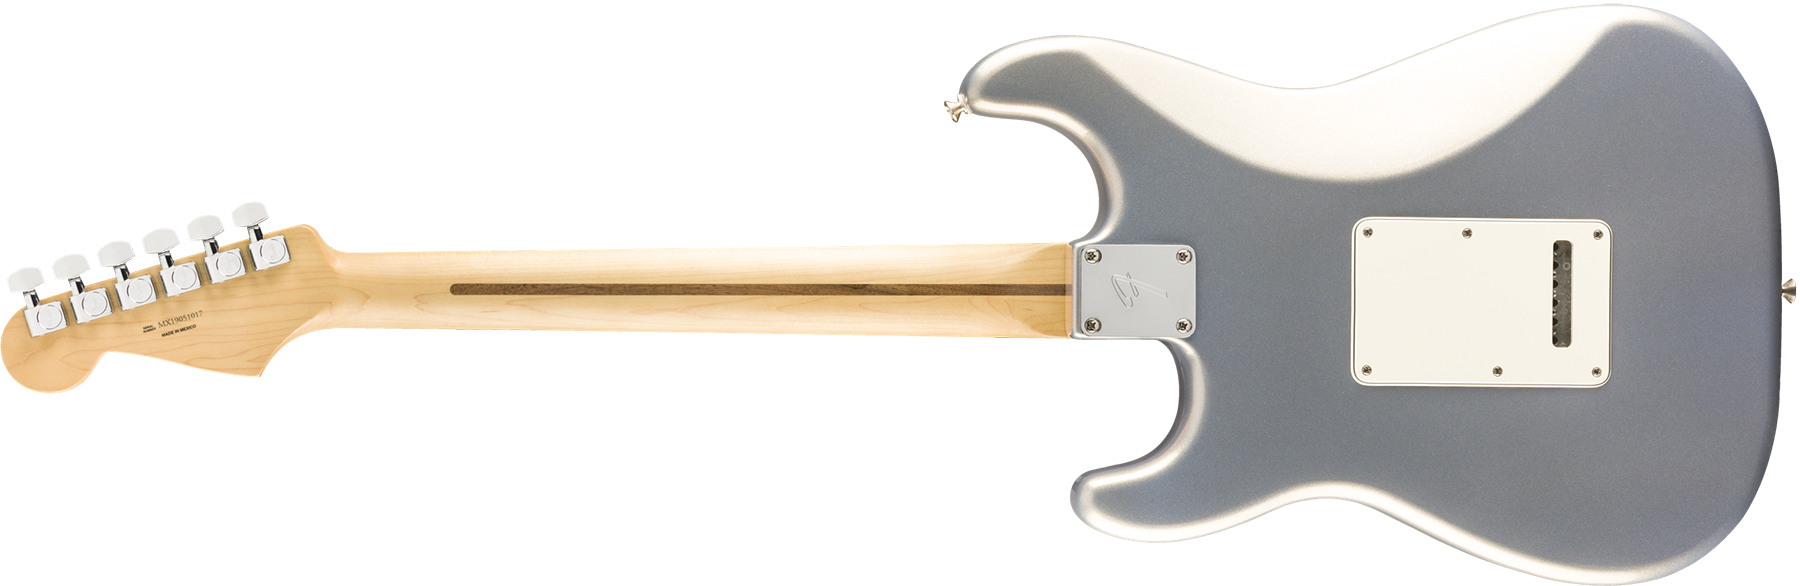 Fender Strat Player Mex 3s Trem Pf - Silver - Guitare Électrique Forme Str - Variation 1